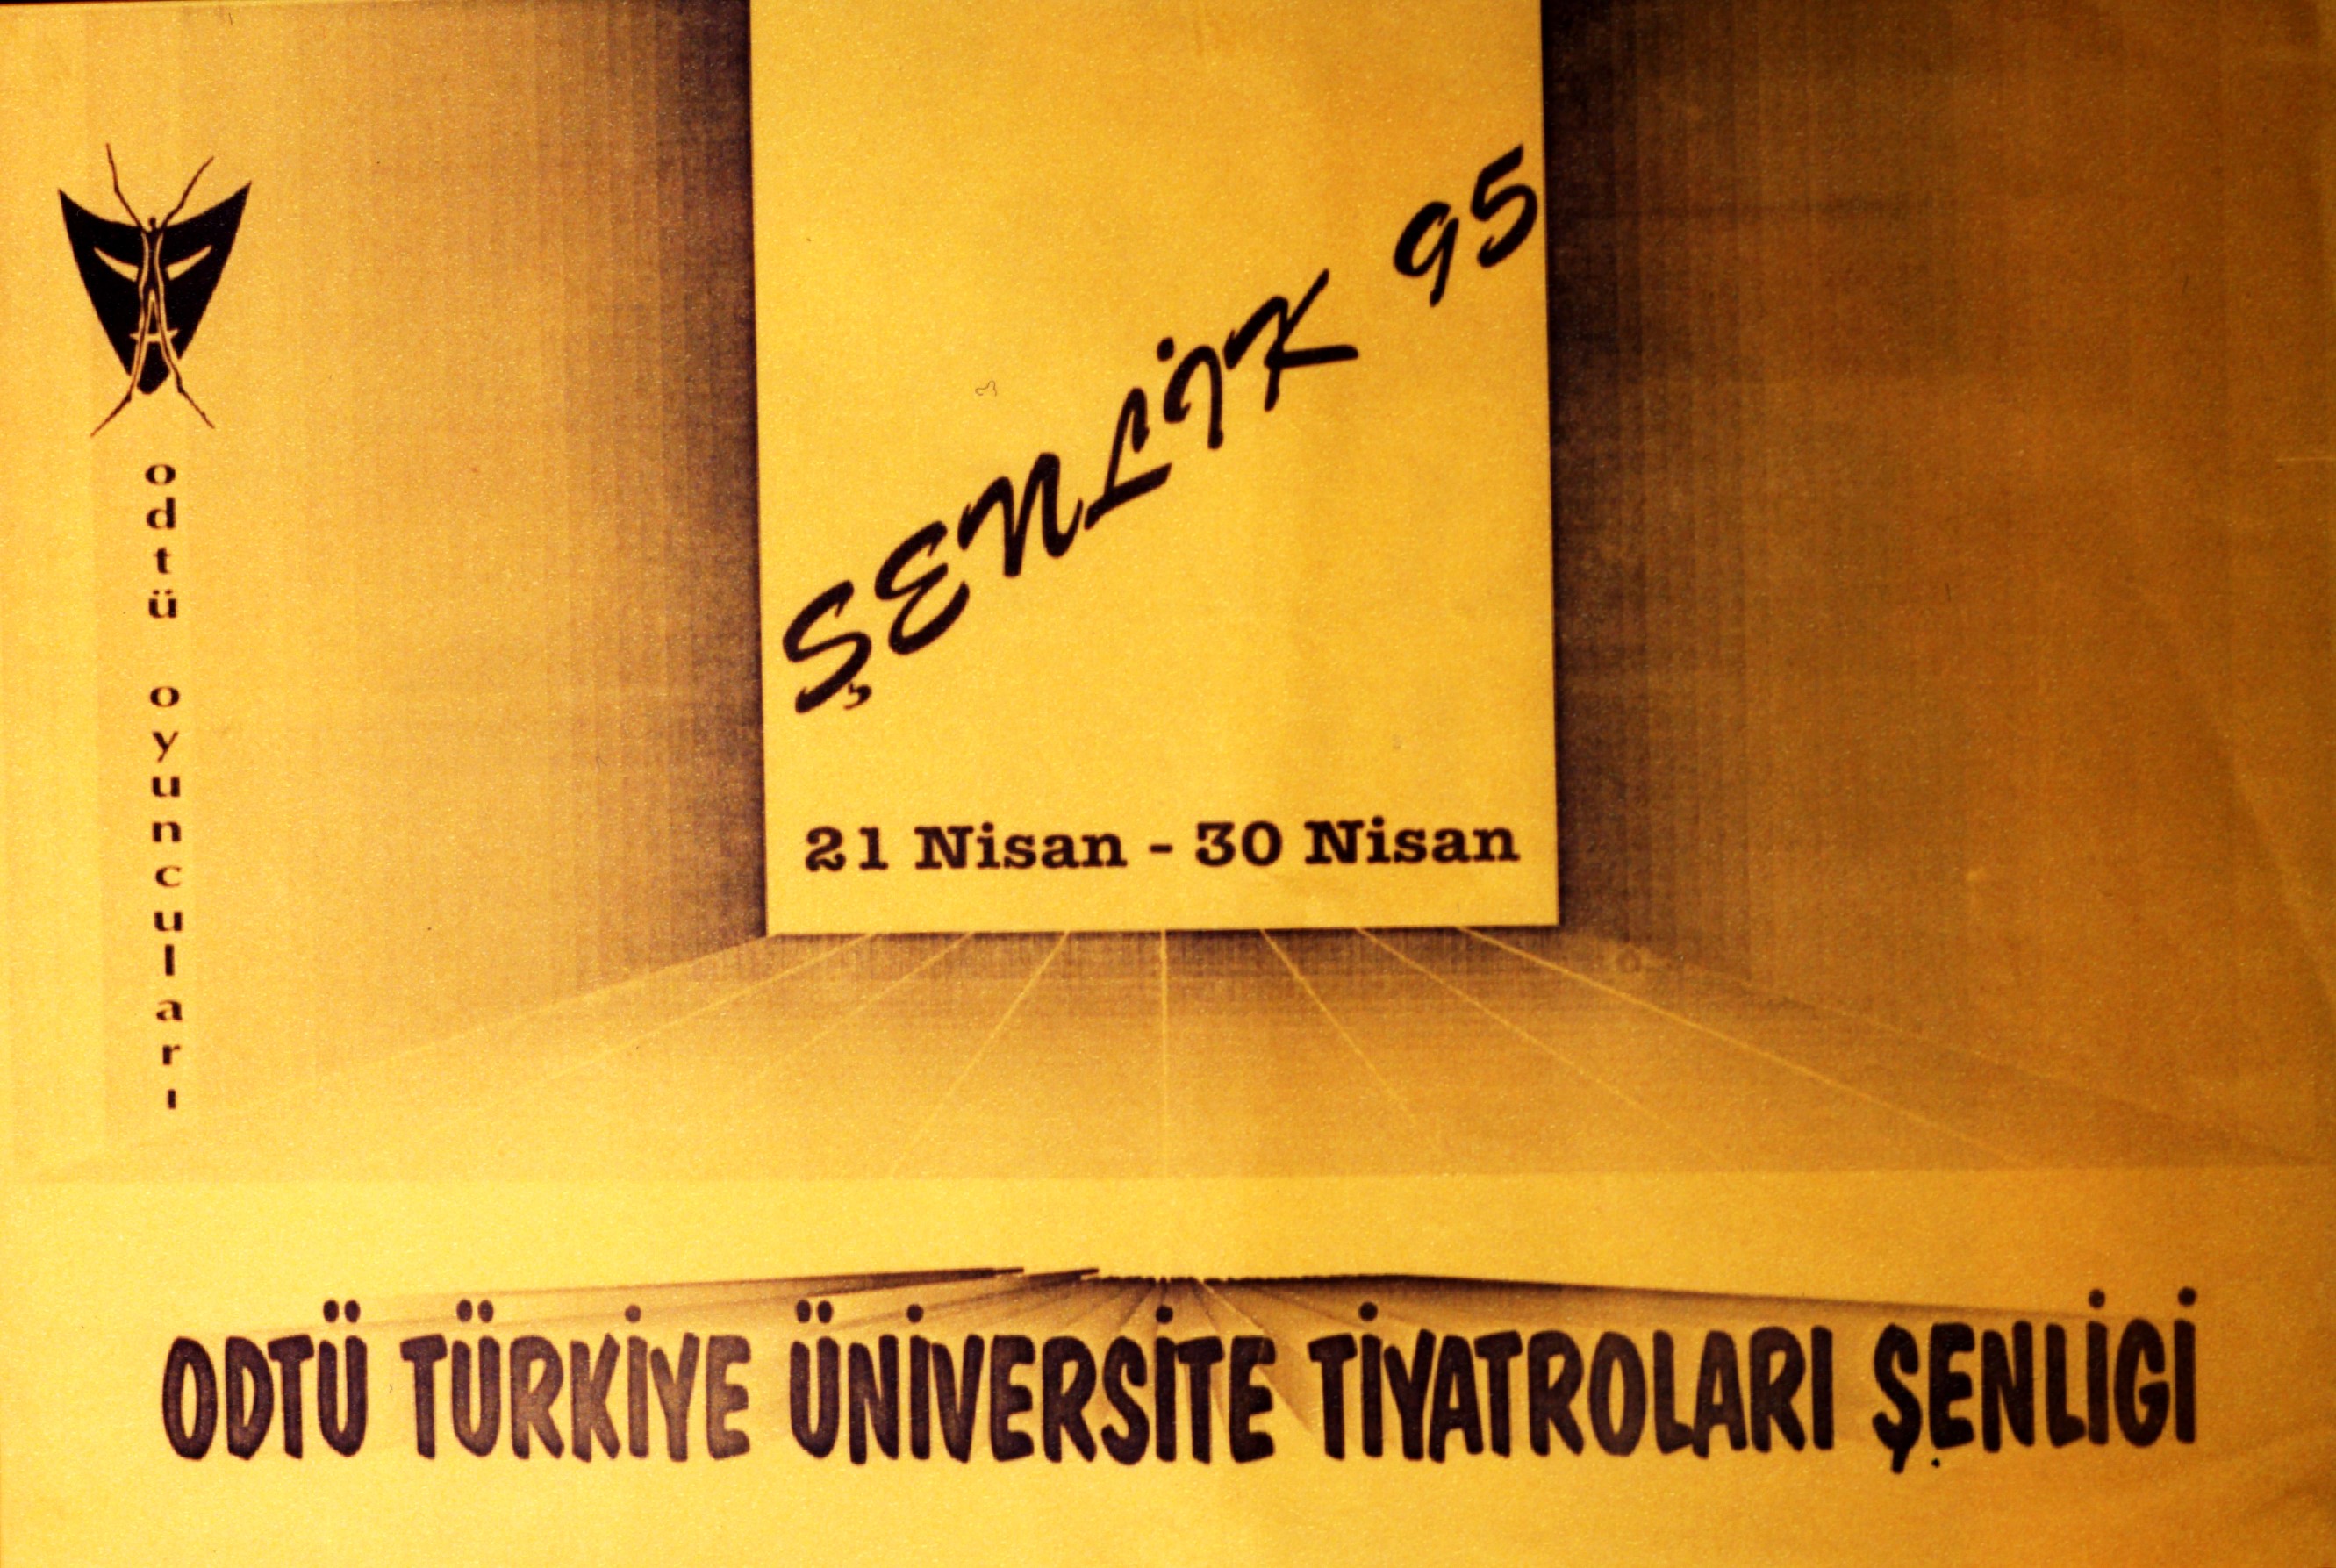 "Festival 95" METU university theater festival poster and brochure (1995)